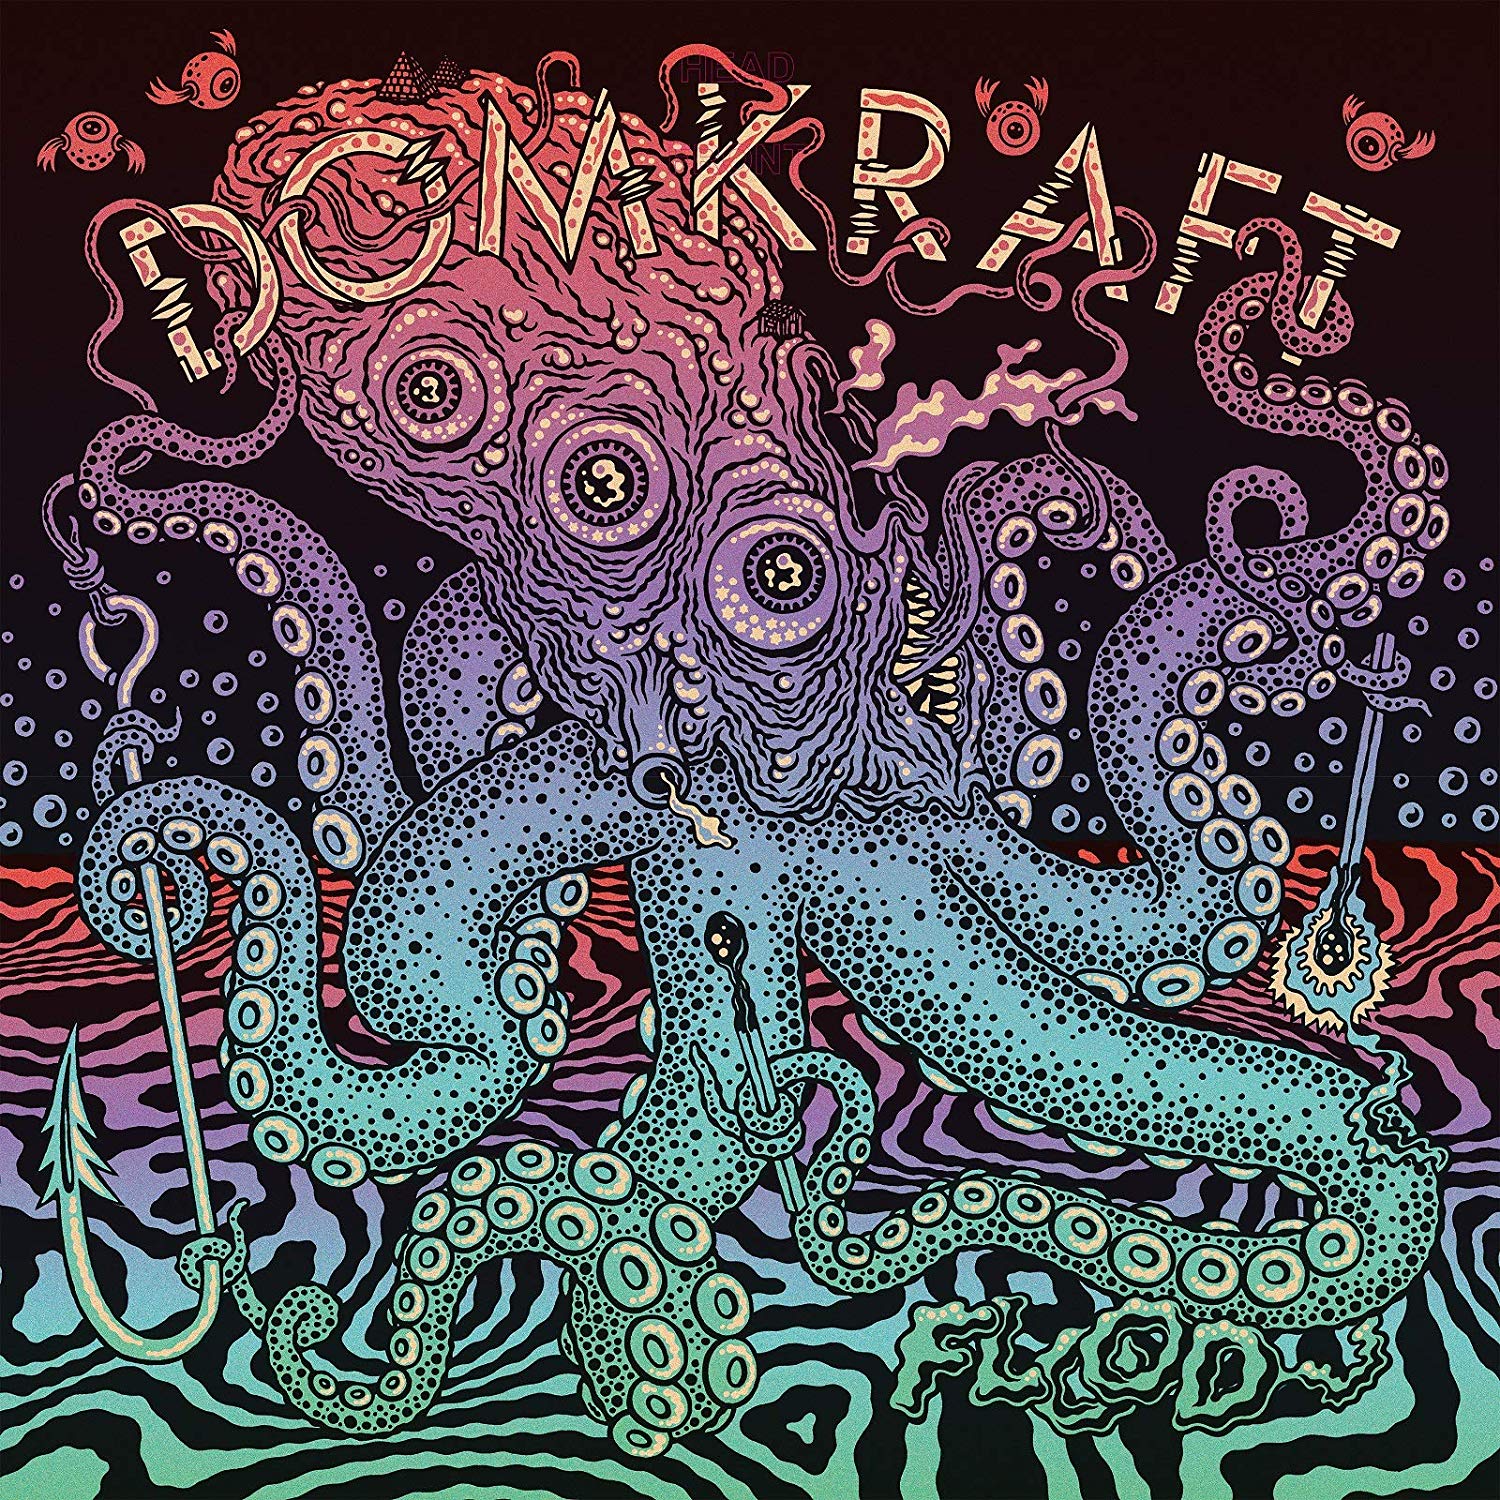 Domkraft - Flood vinyl cover